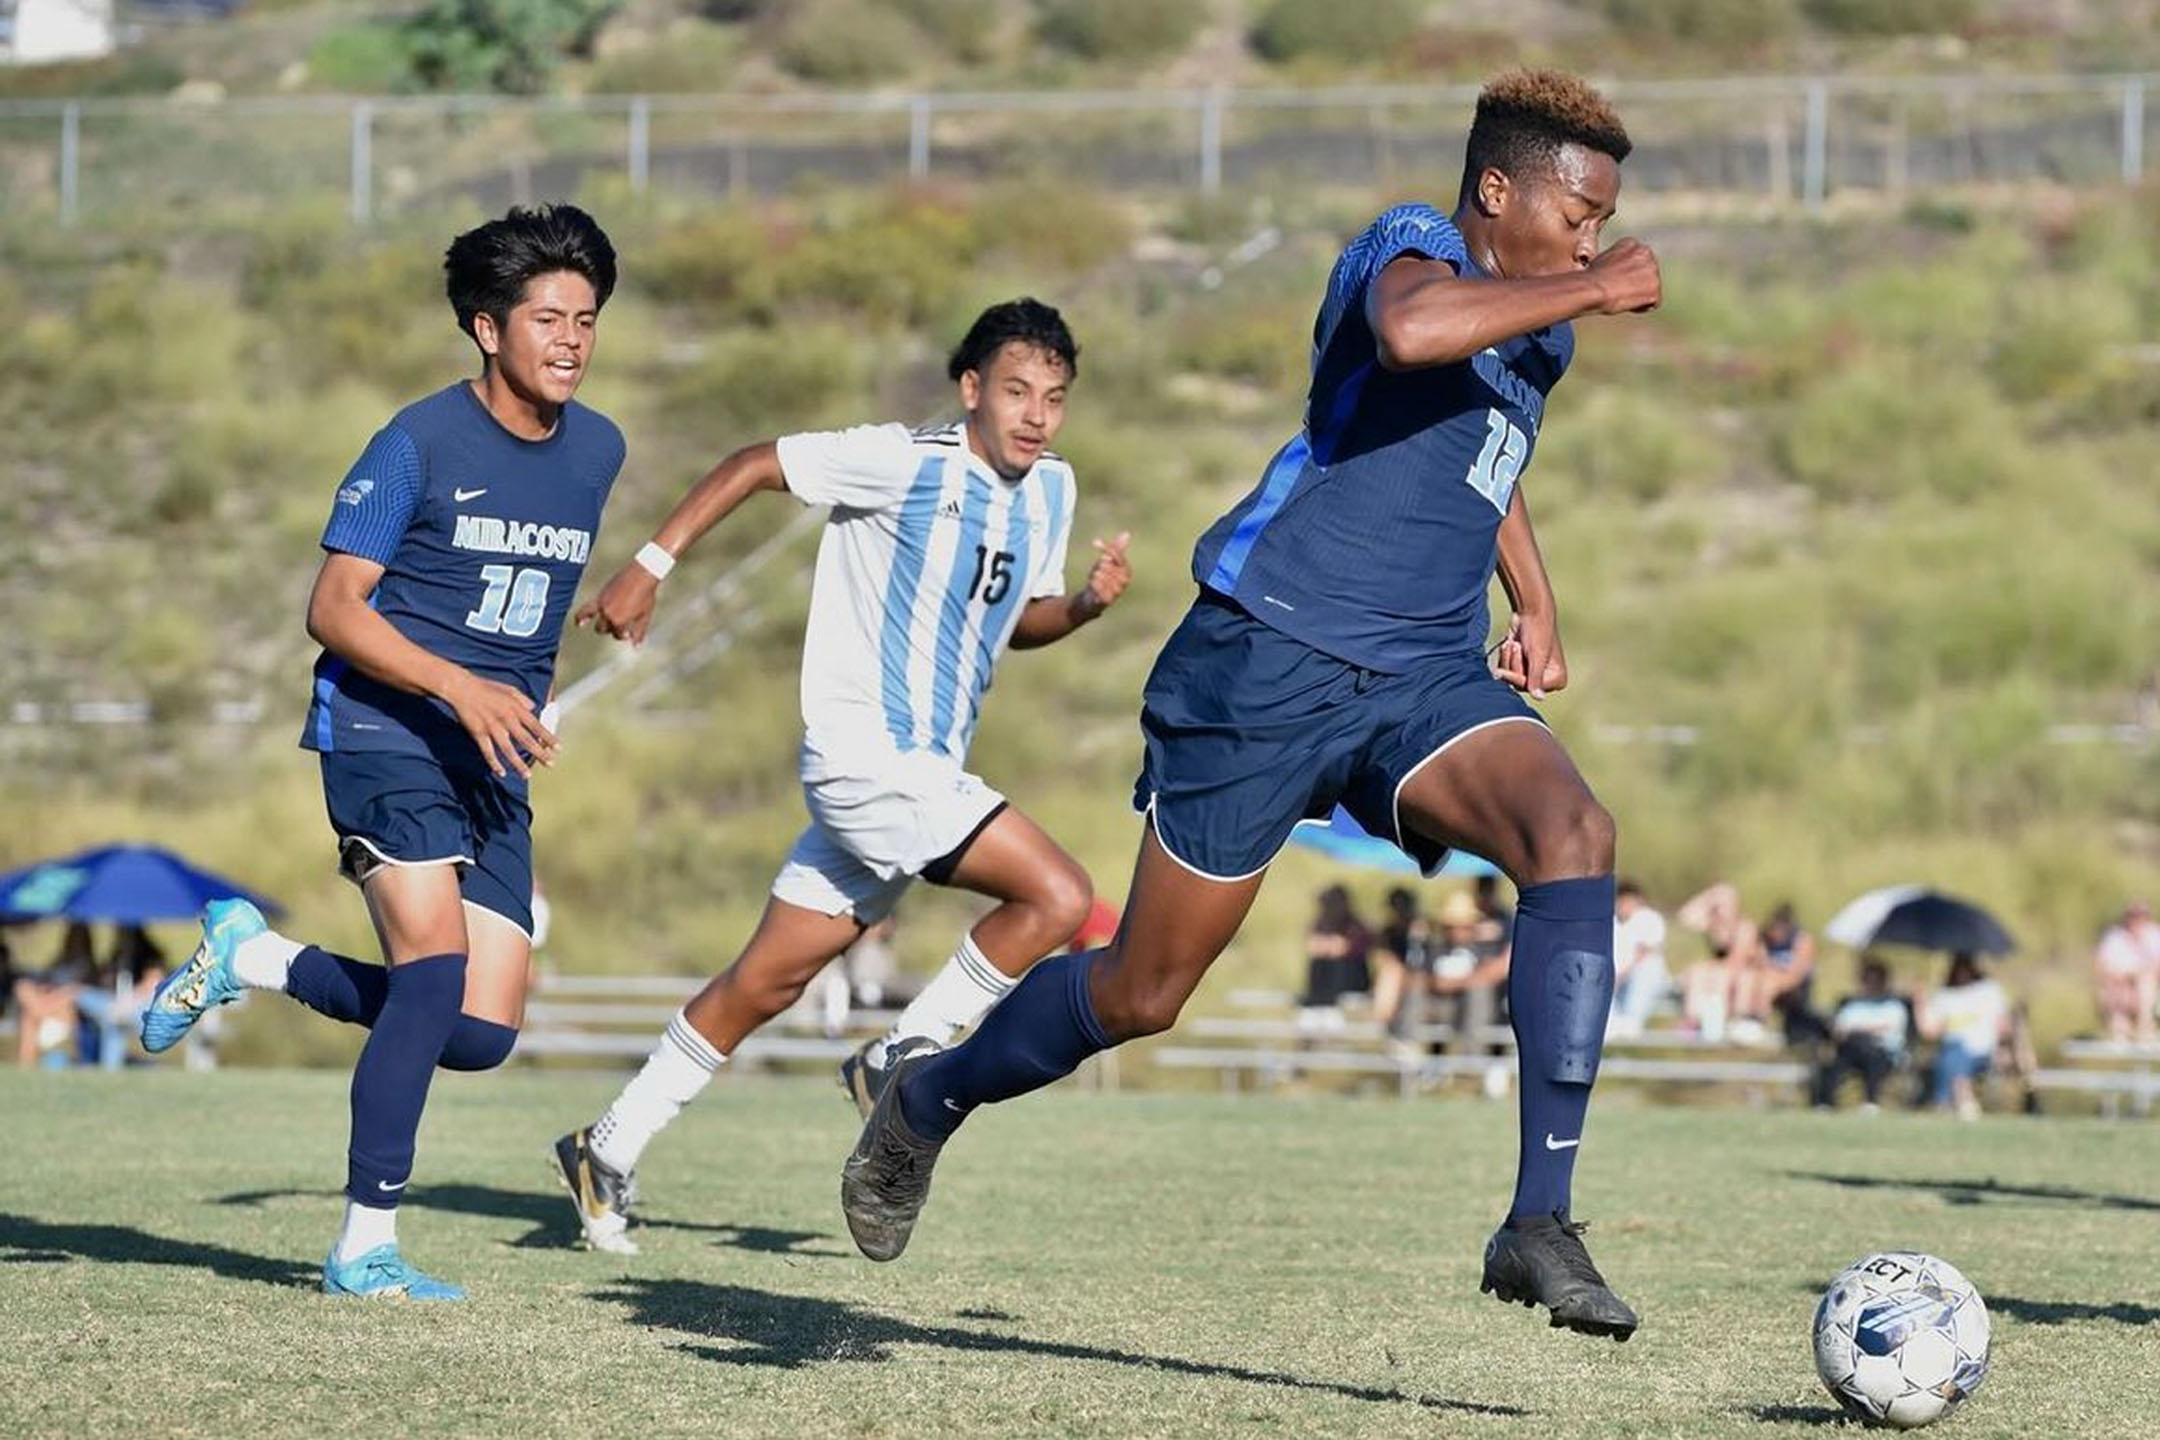 Men's Soccer player, Luke Adomey, dribbles the soccer ball as teammate Alexis Aparicio runs behind him.